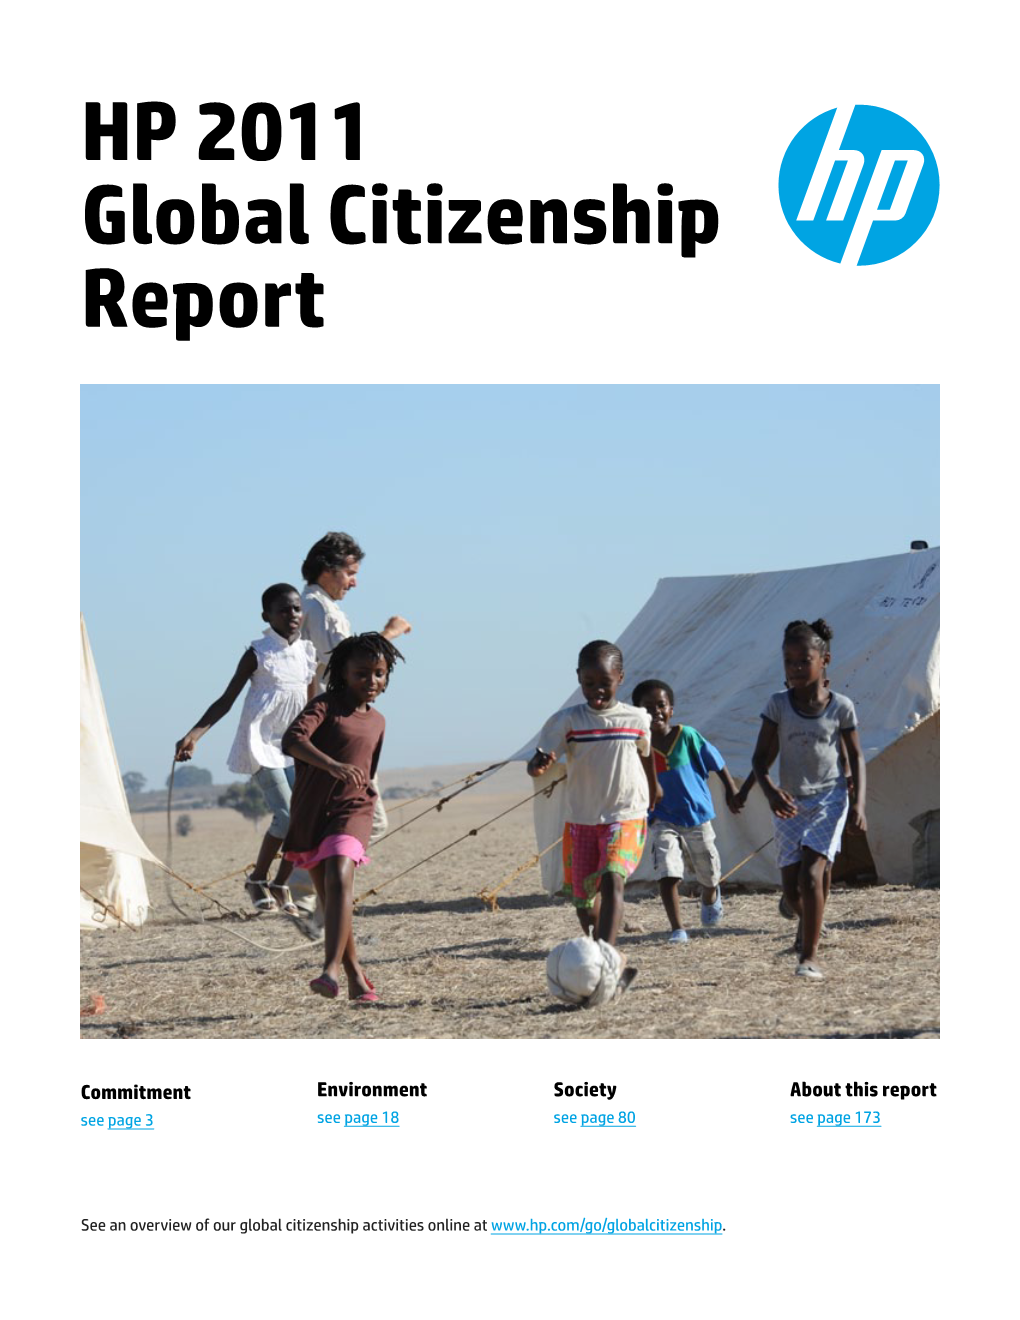 HP 2011 Global Citizenship Report